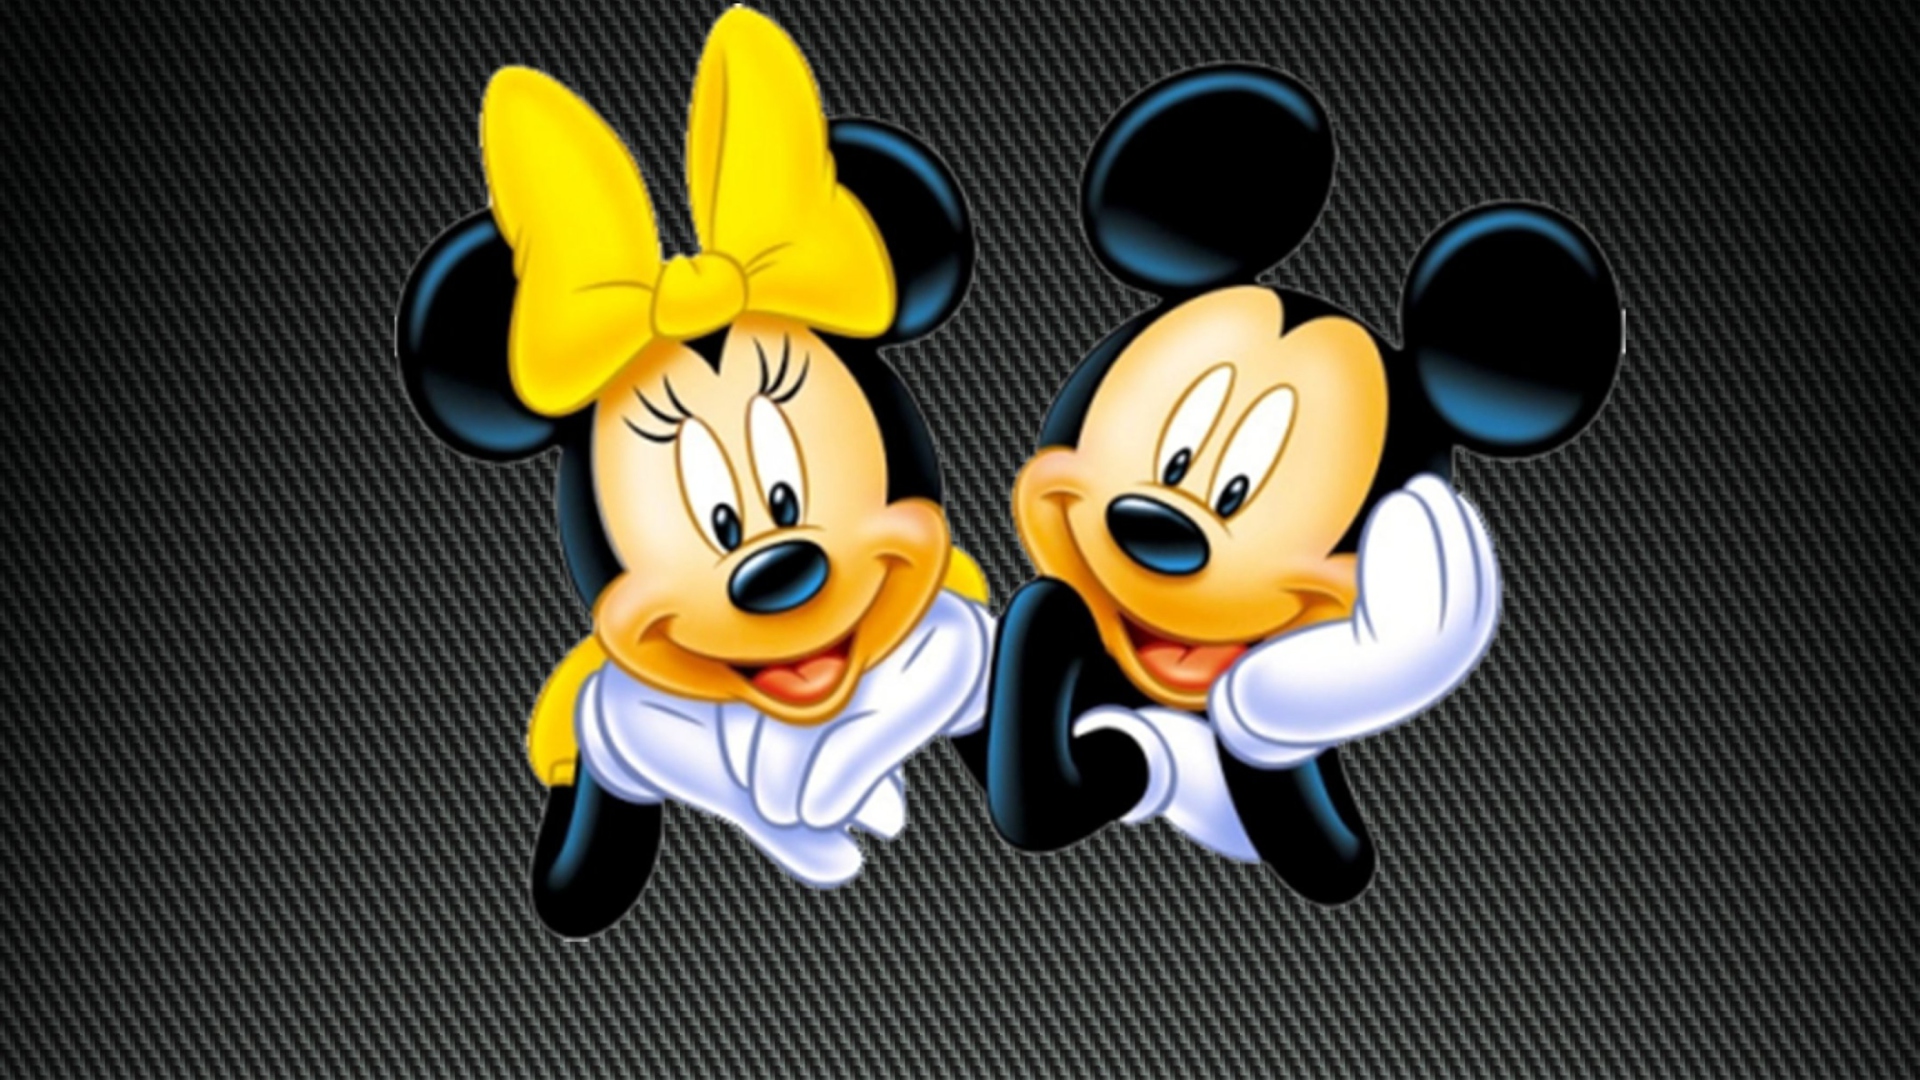 Mickey And Minnie Wallpaper For Desktop Full HD